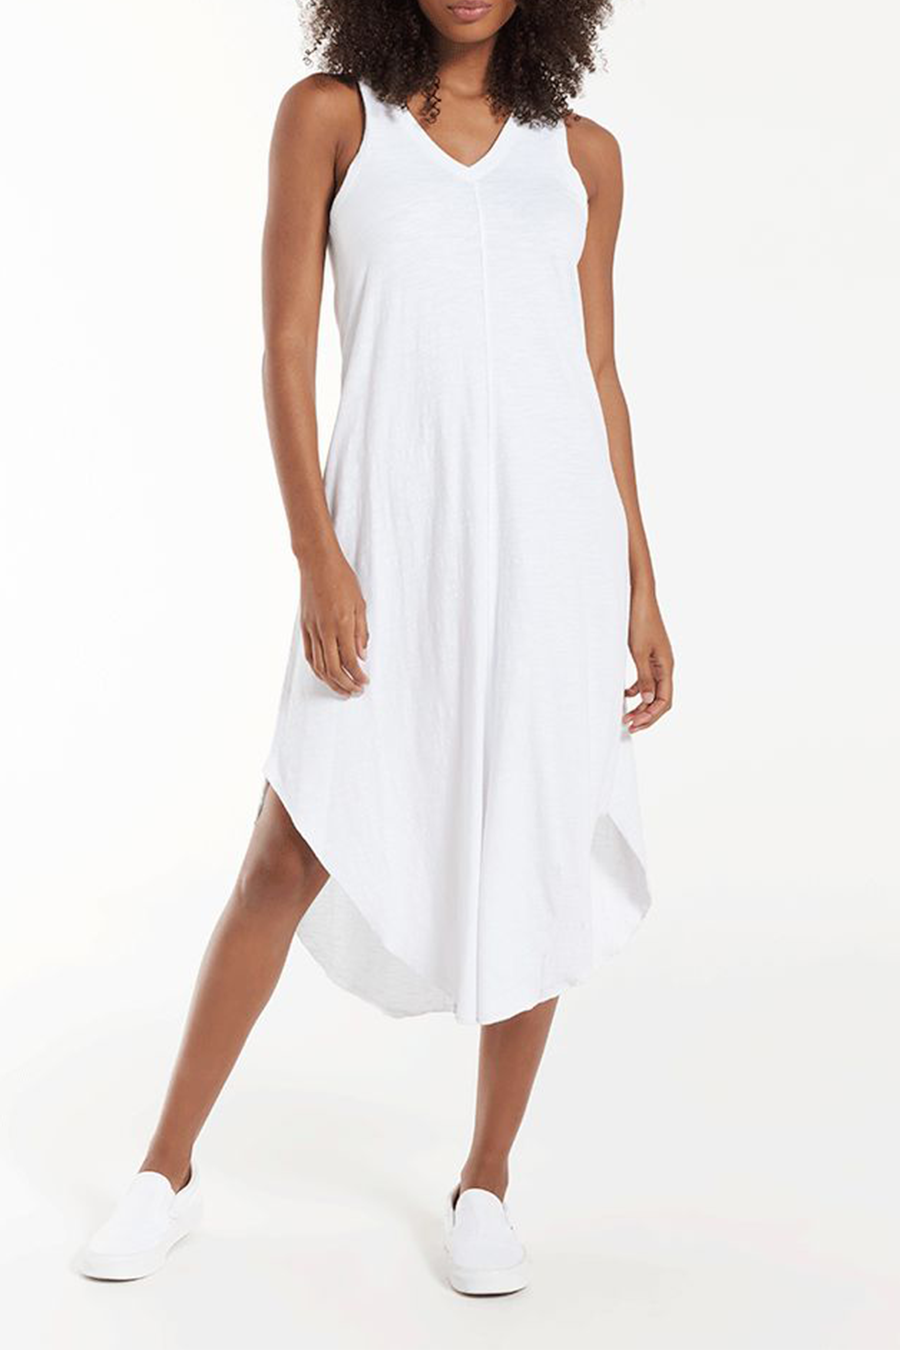 Reverie Dress | White - Main Image Number 1 of 2